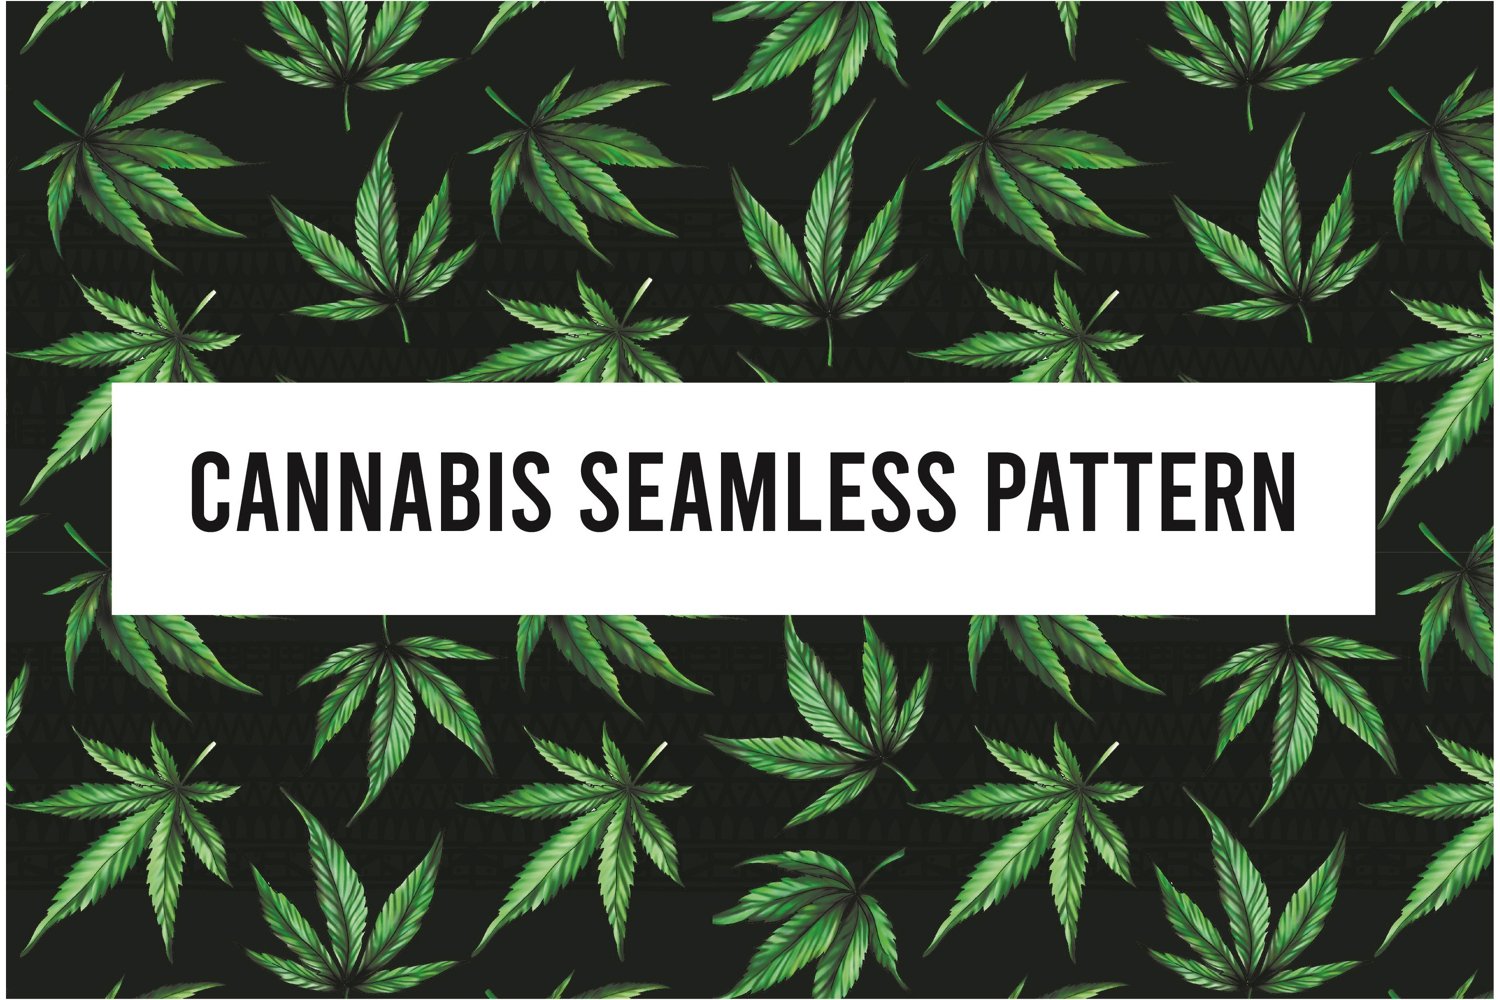 Cover image of Marijuana pattern.